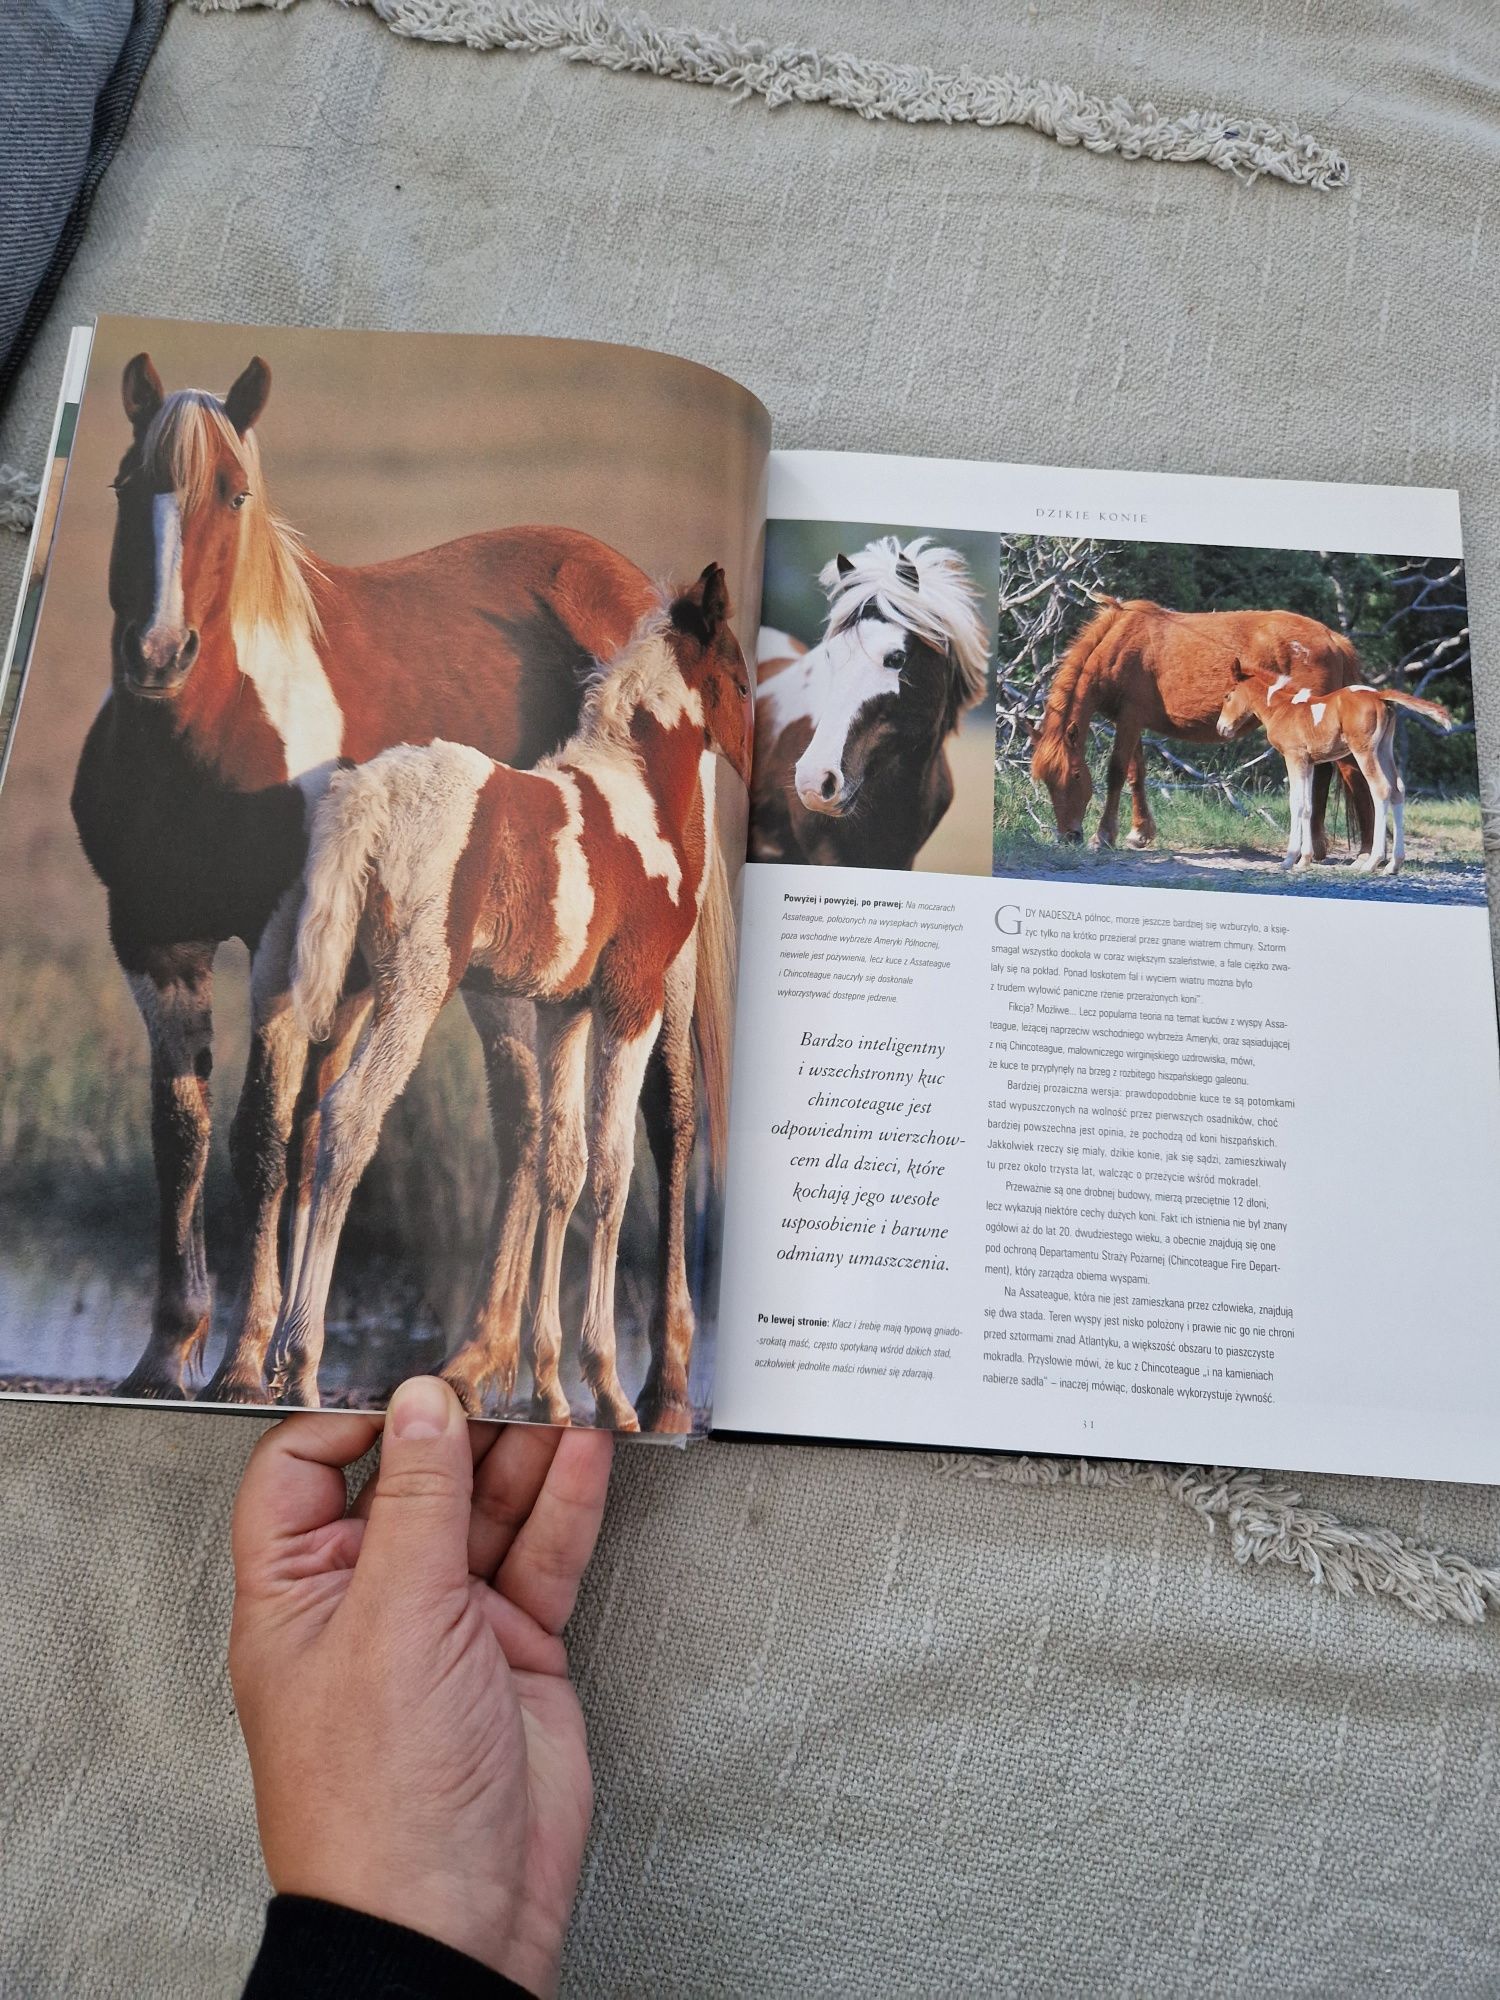 Piękno konia album fotograficzny o koniach